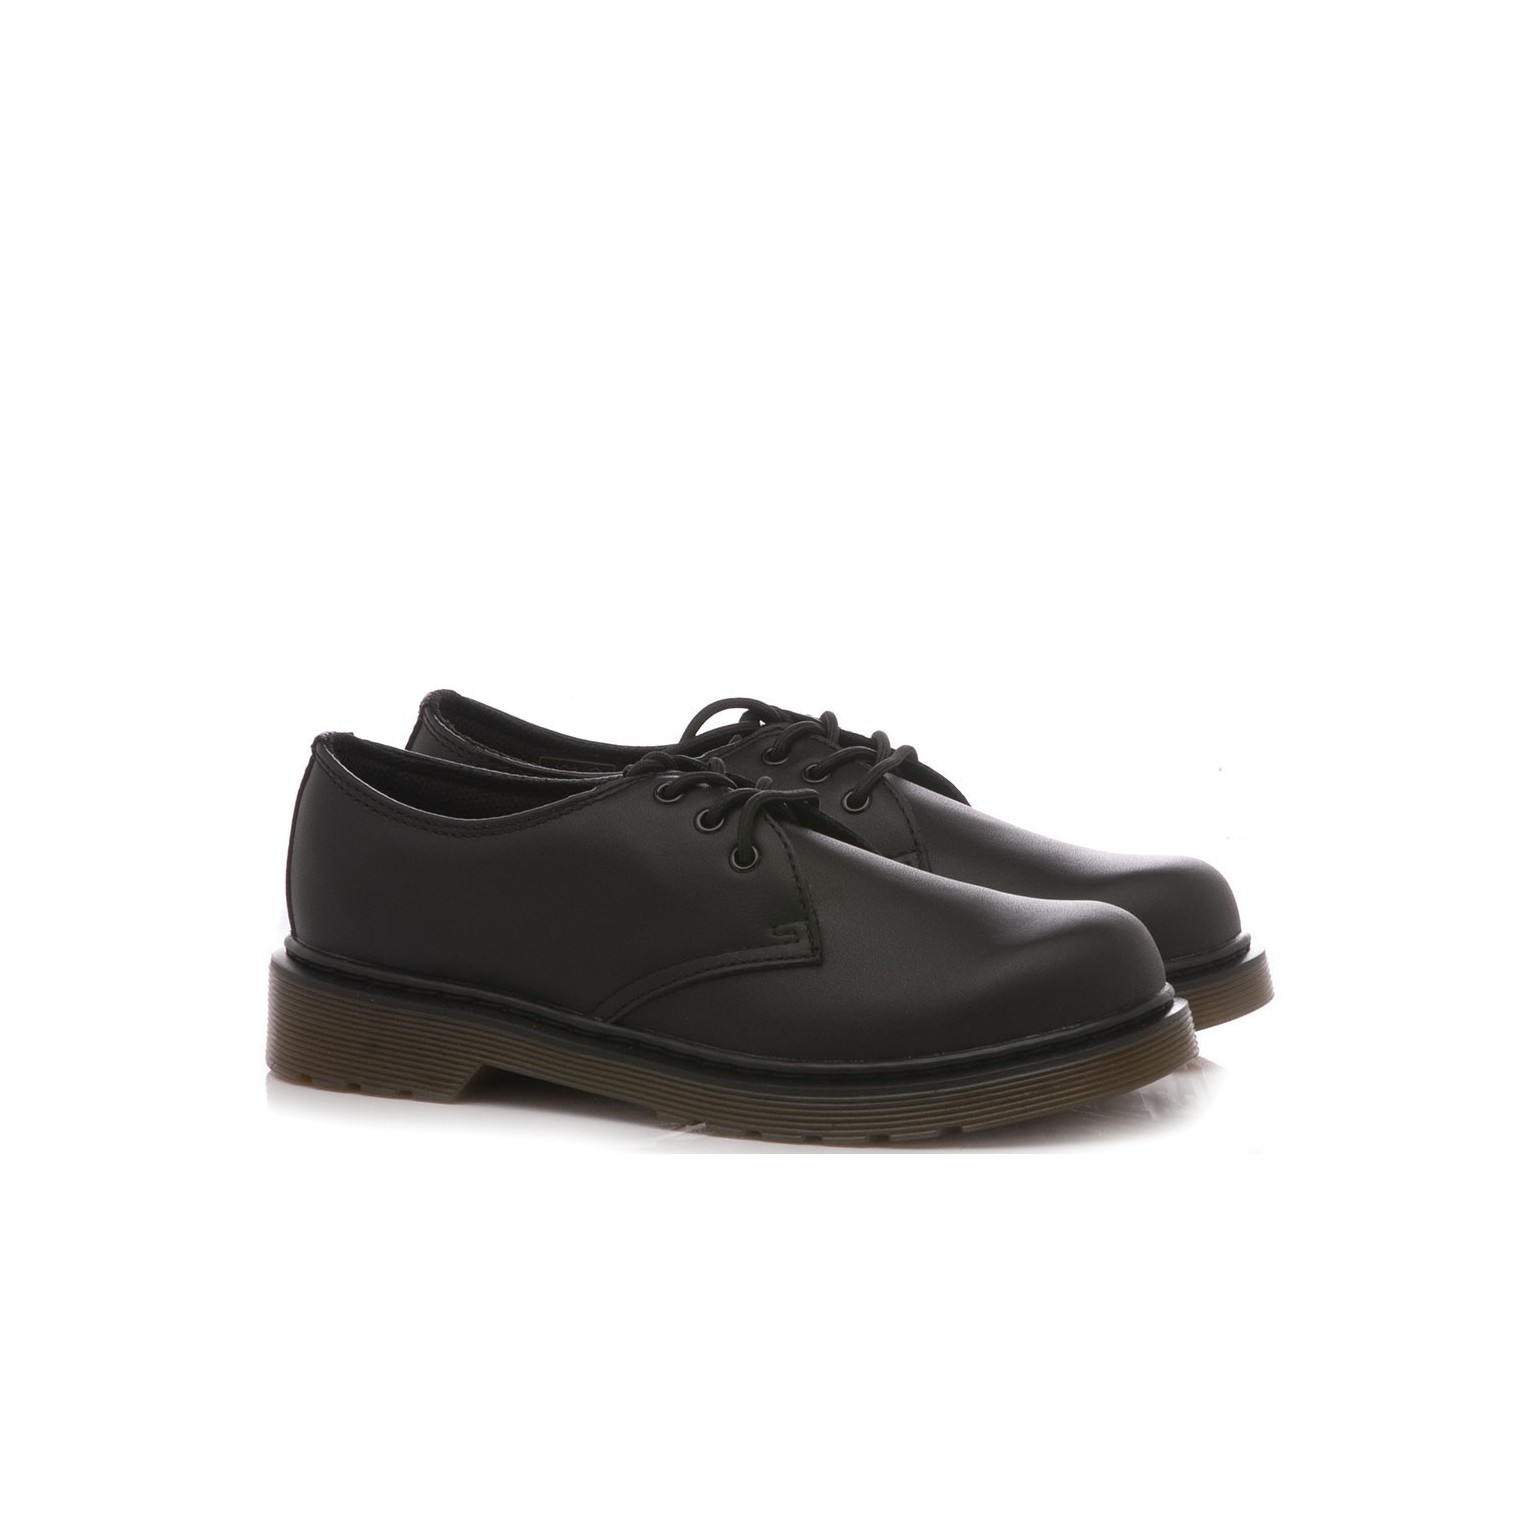 Dr. Martens Children's Shoes  Black 1461J 15378001